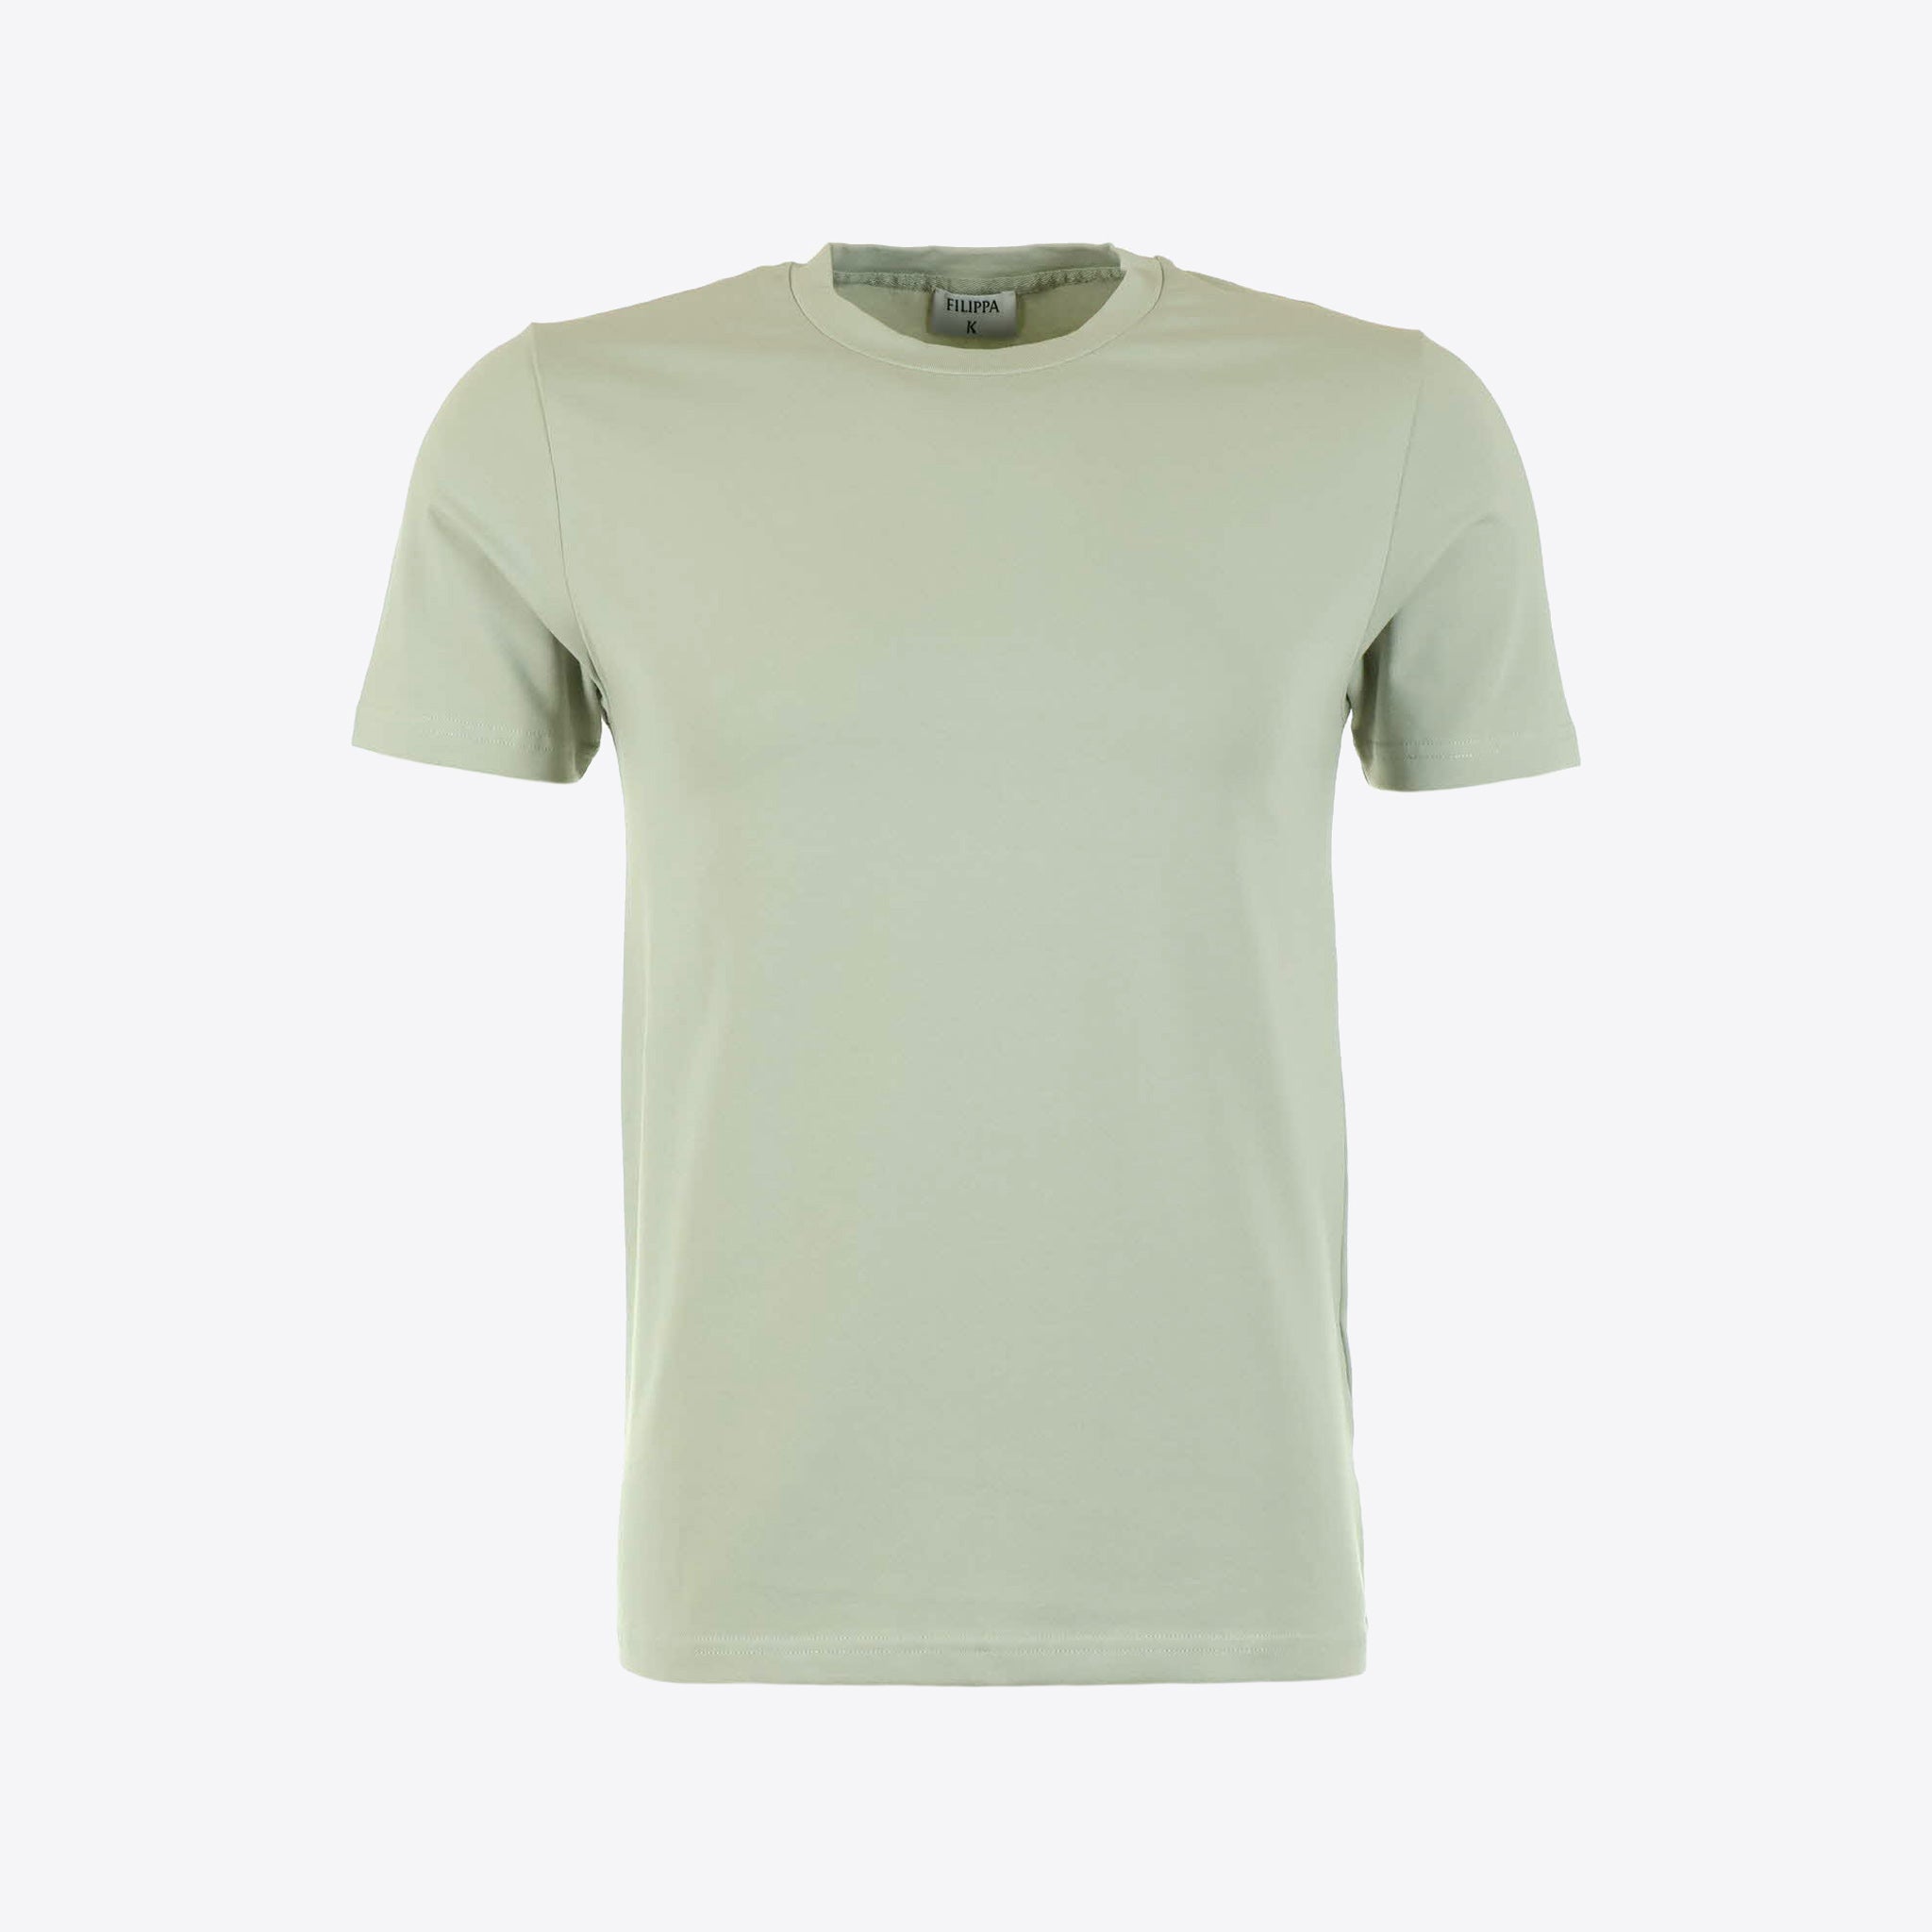 Filippa K T-shirt Groen Stretch